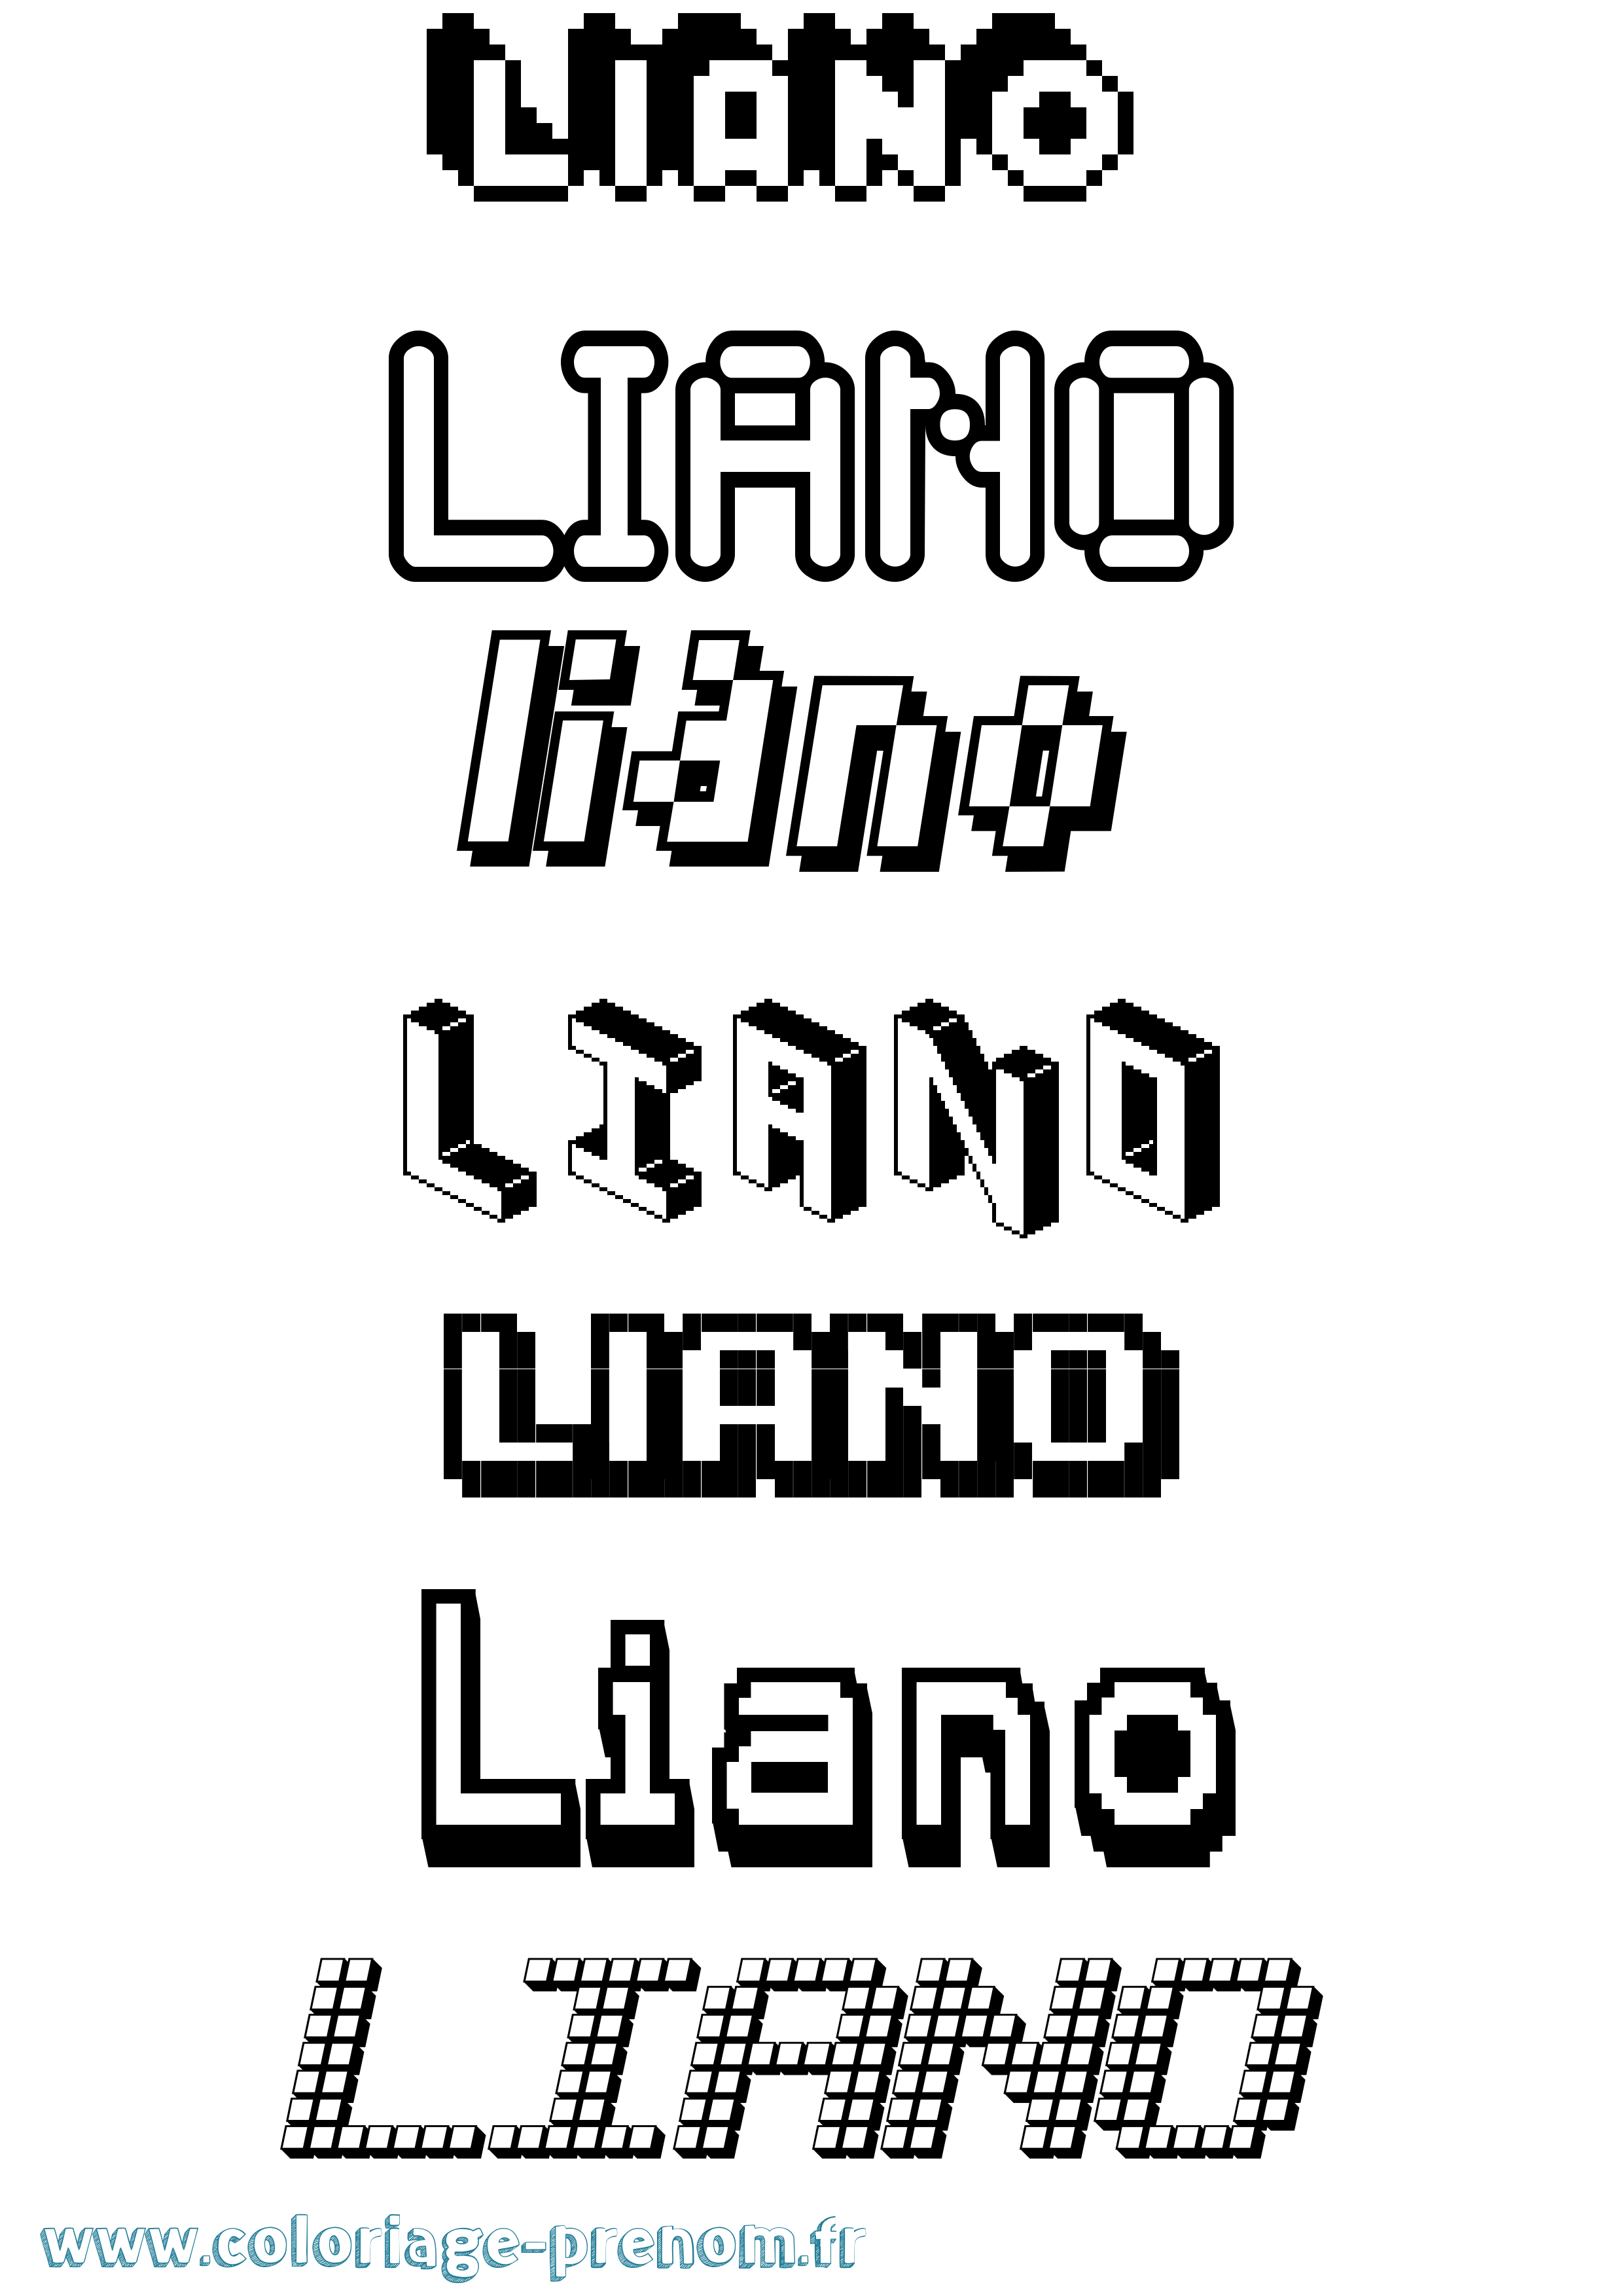 Coloriage prénom Liano Pixel